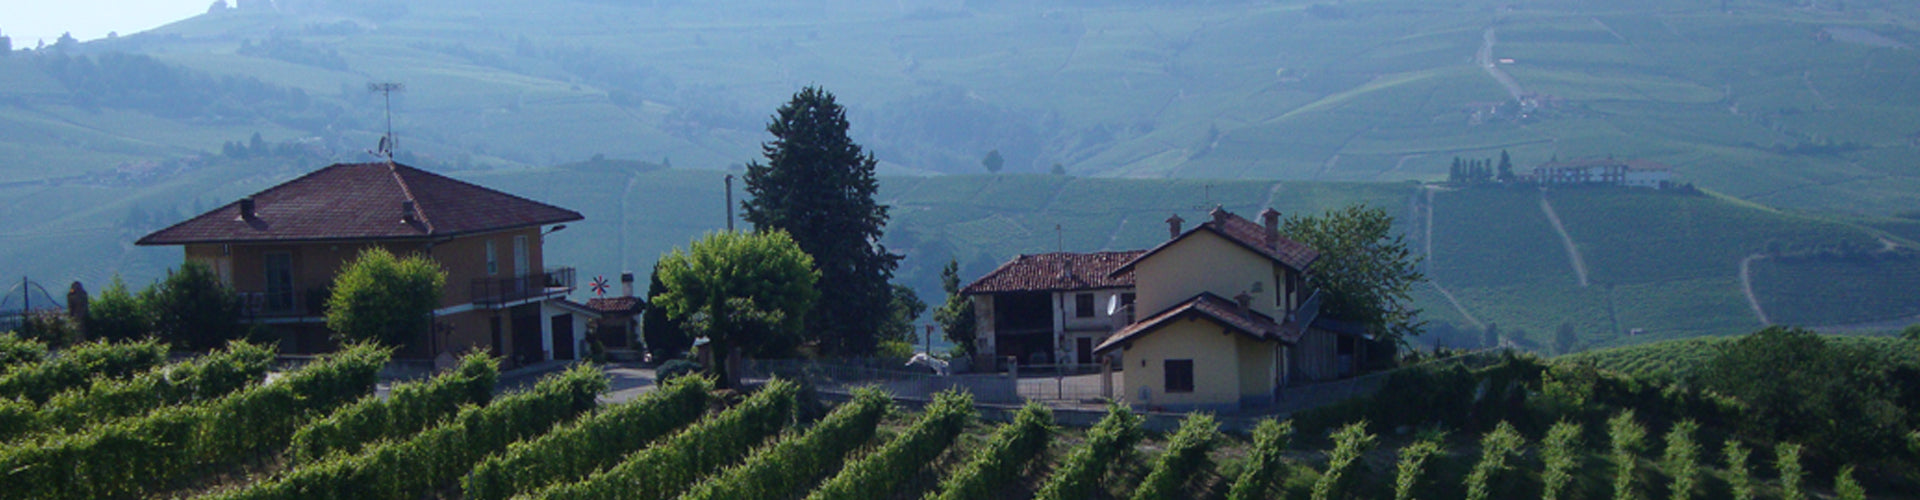 Giacosa Vineyards Neive in Piemonte, Italy